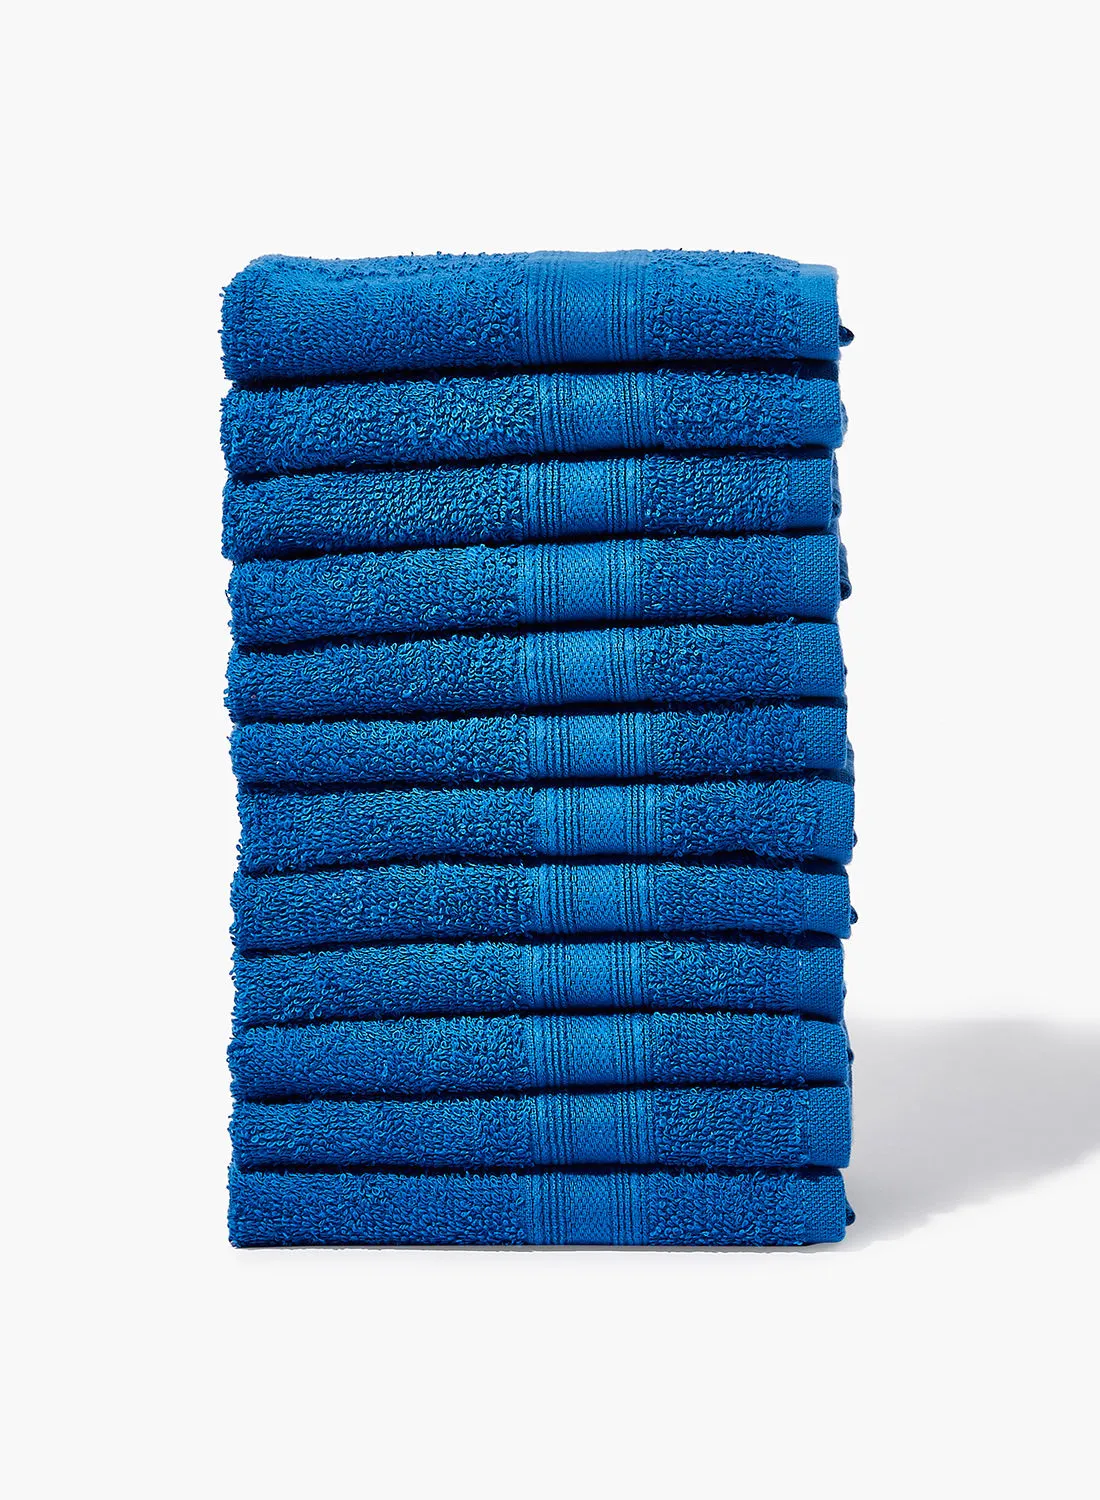 Amal 12 Piece Bathroom Towel Set - 400 GSM 100% Cotton Terry - 12 Face Towel - Blue Color -Quick Dry - Super Absorbent